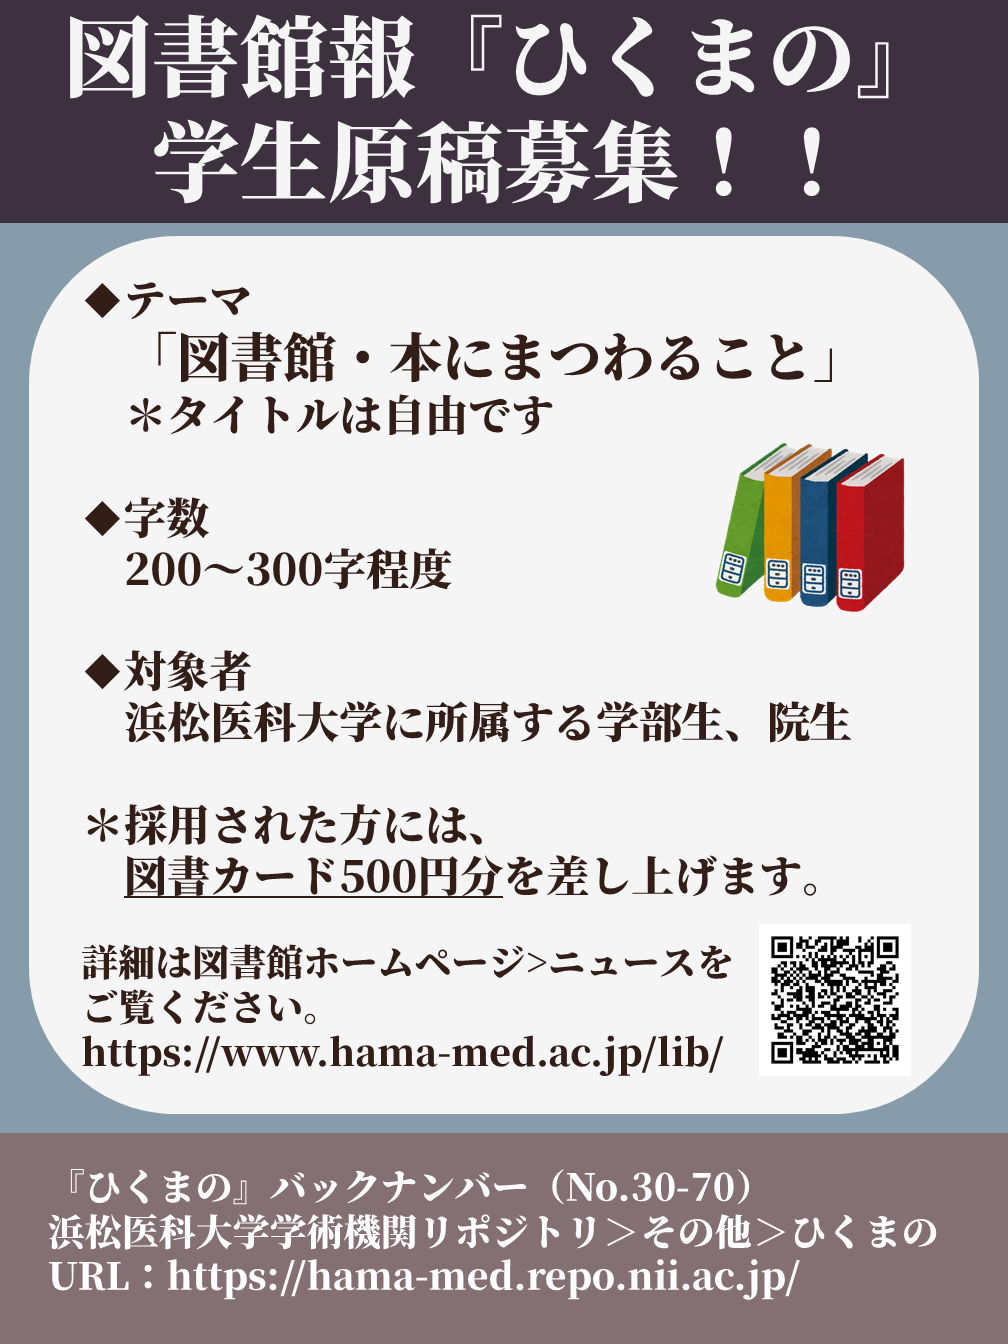 https://www.hama-med.ac.jp/lib/poster.png